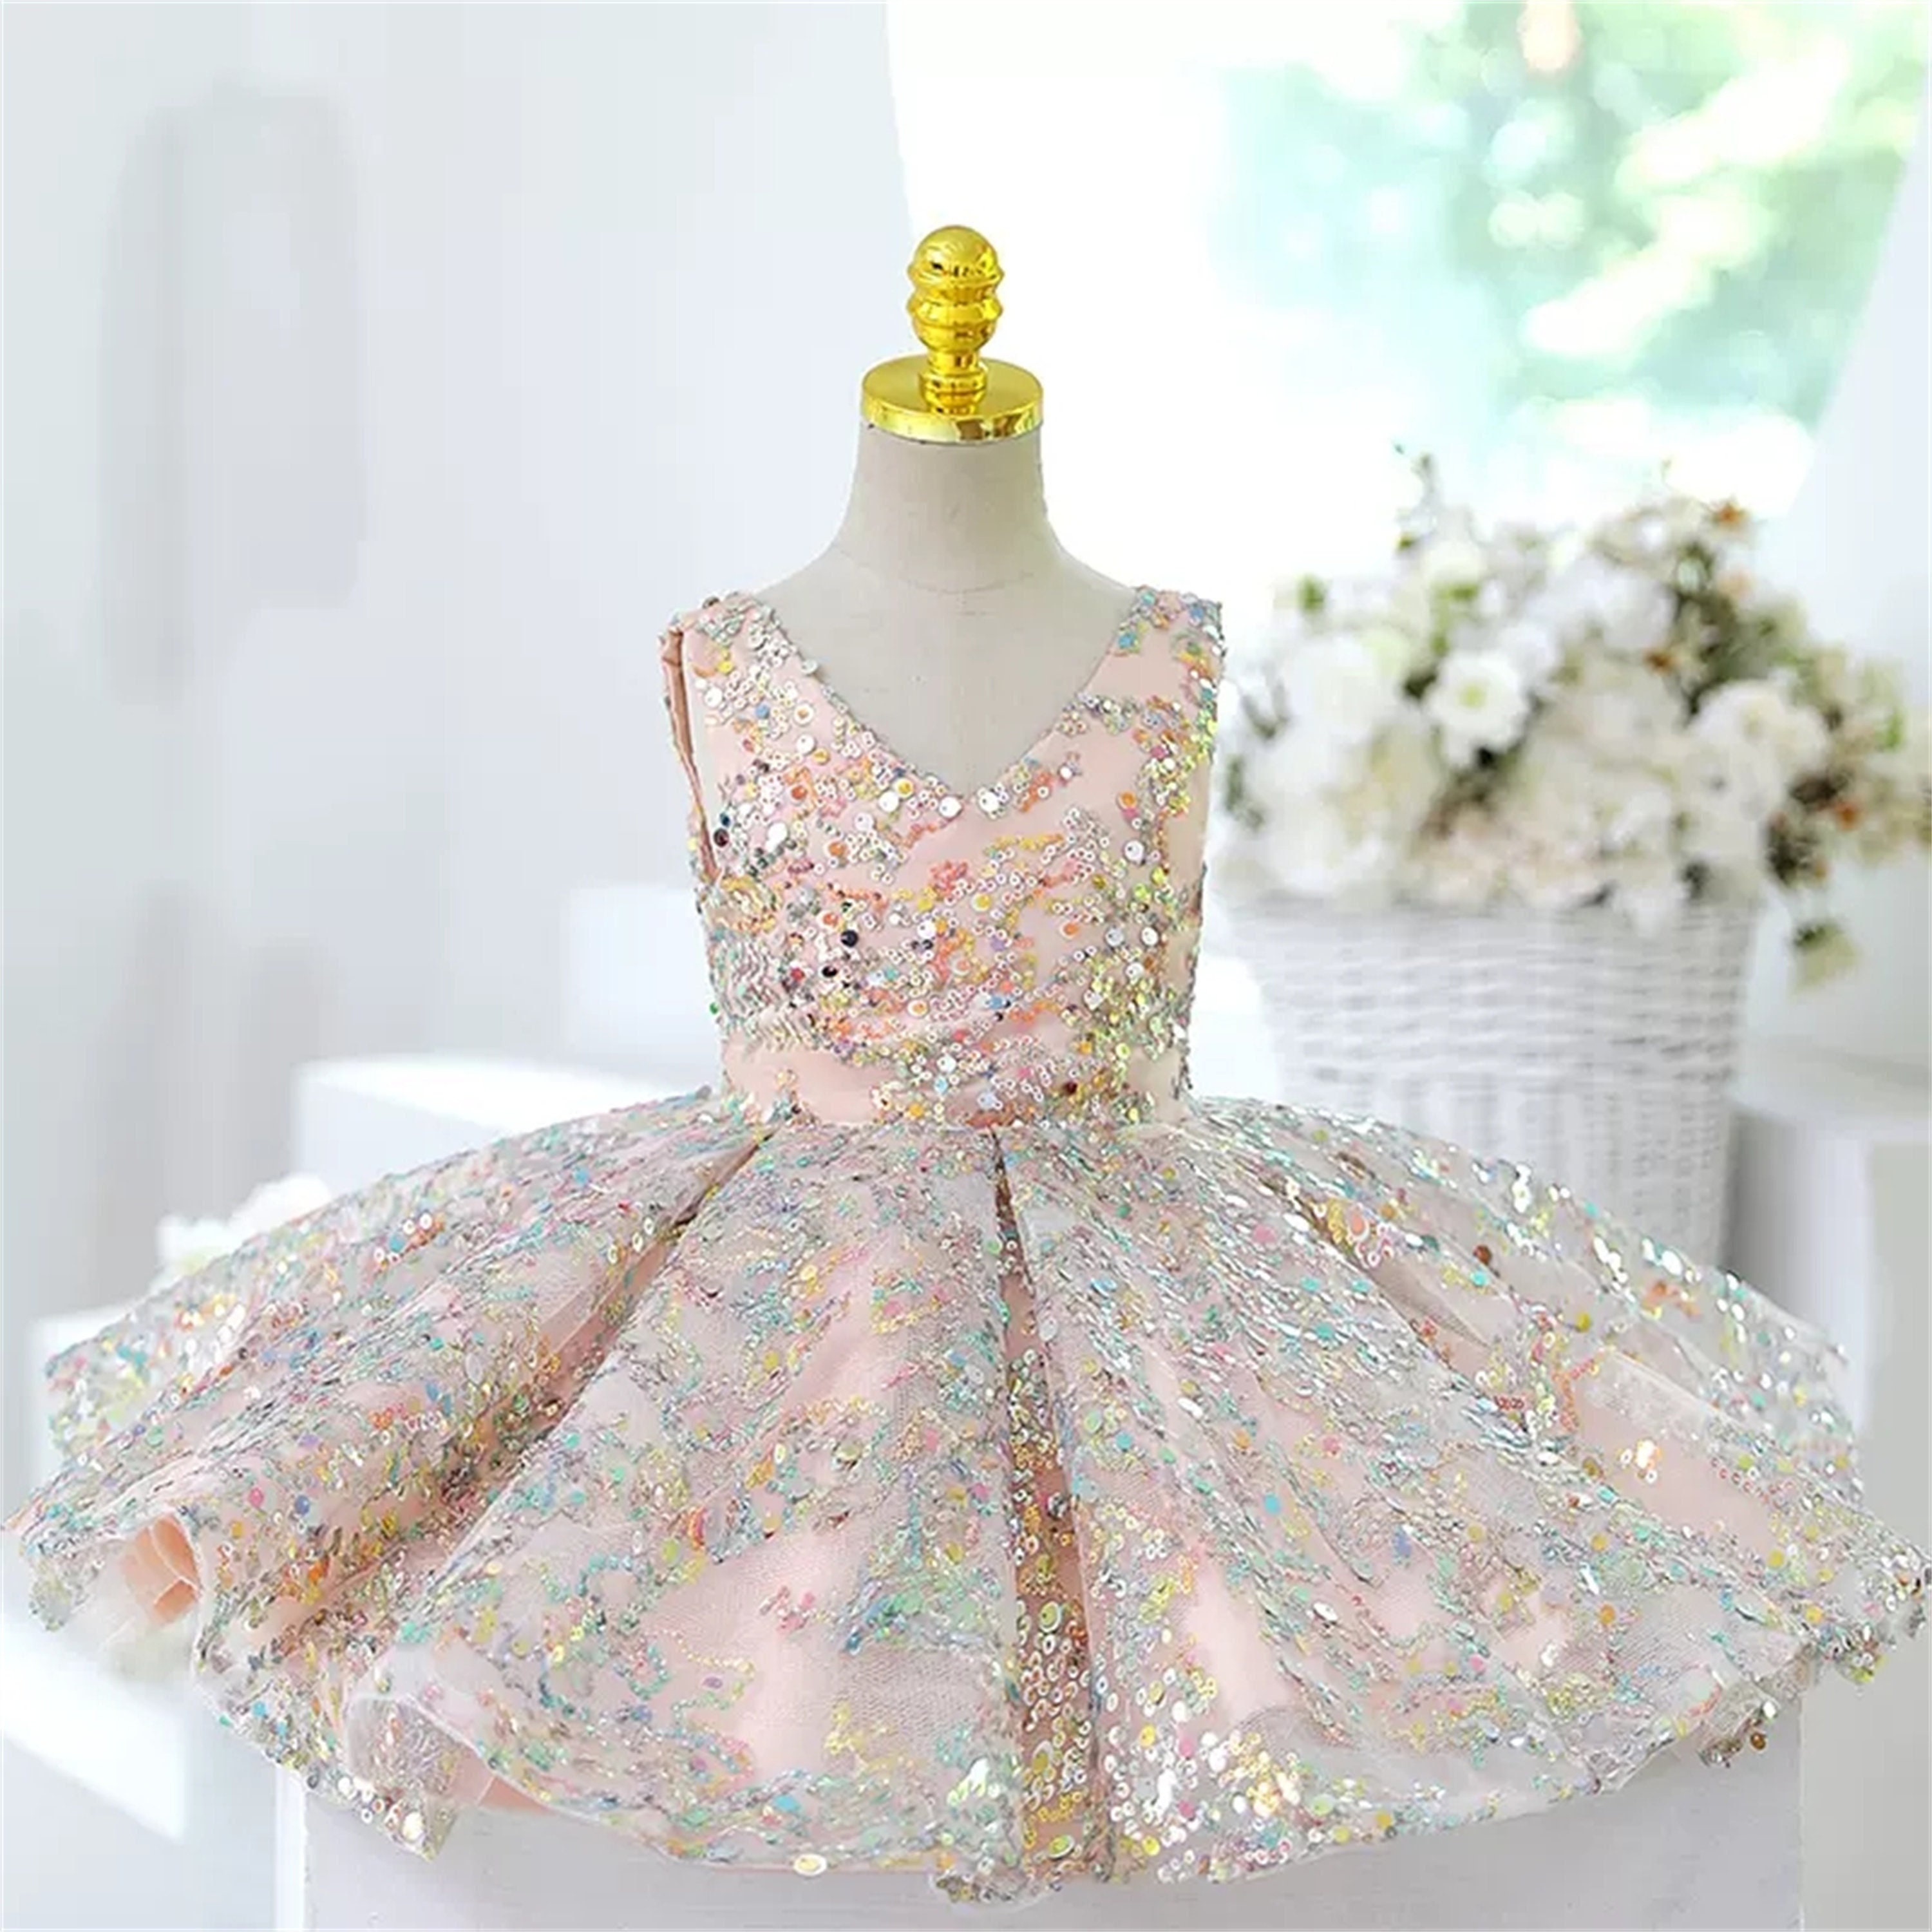 krijgen censuur Regeren Baby Glitter Dress - Etsy